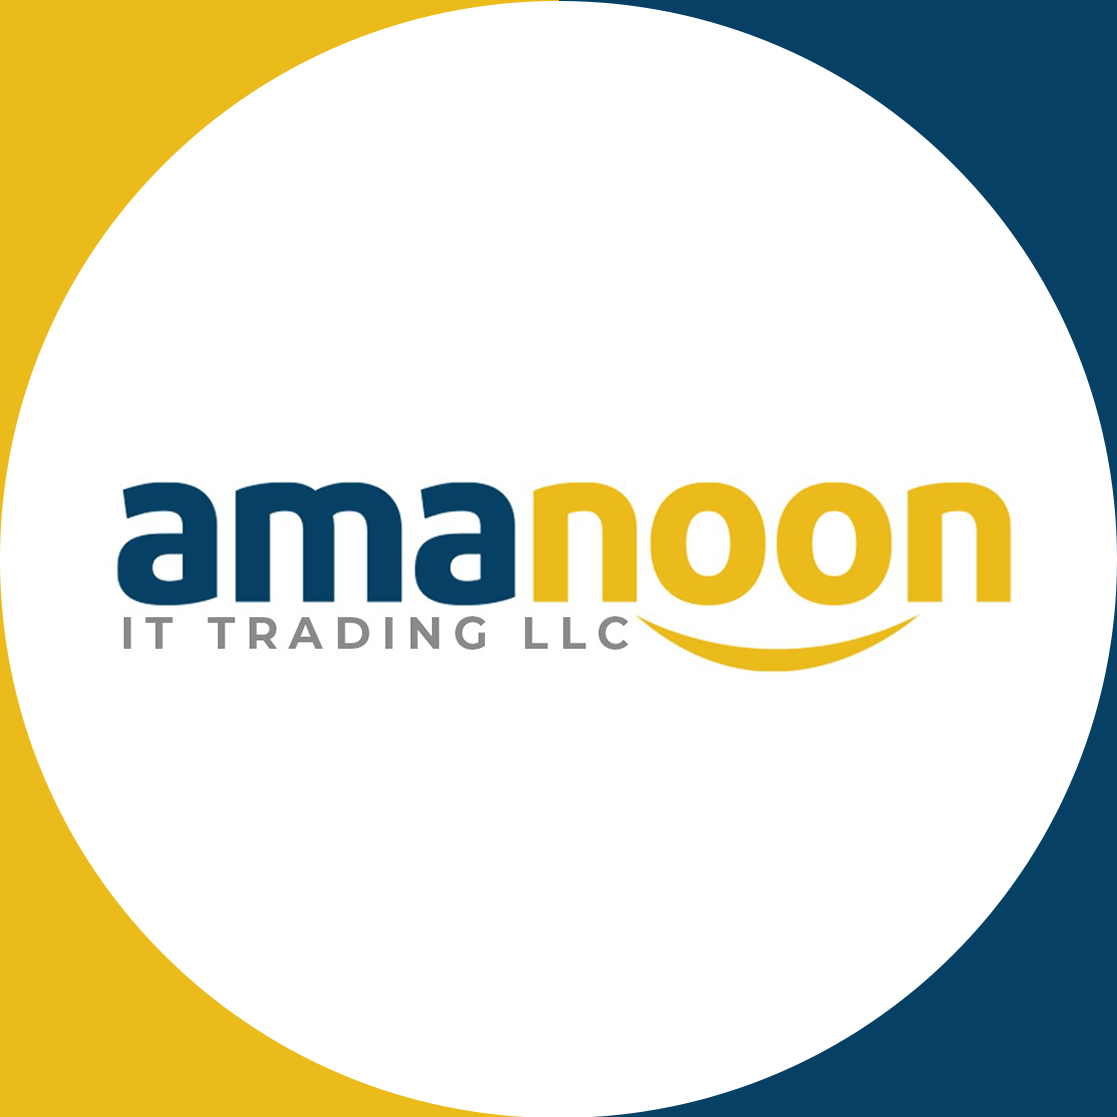 Amanoon IT Trading LLC